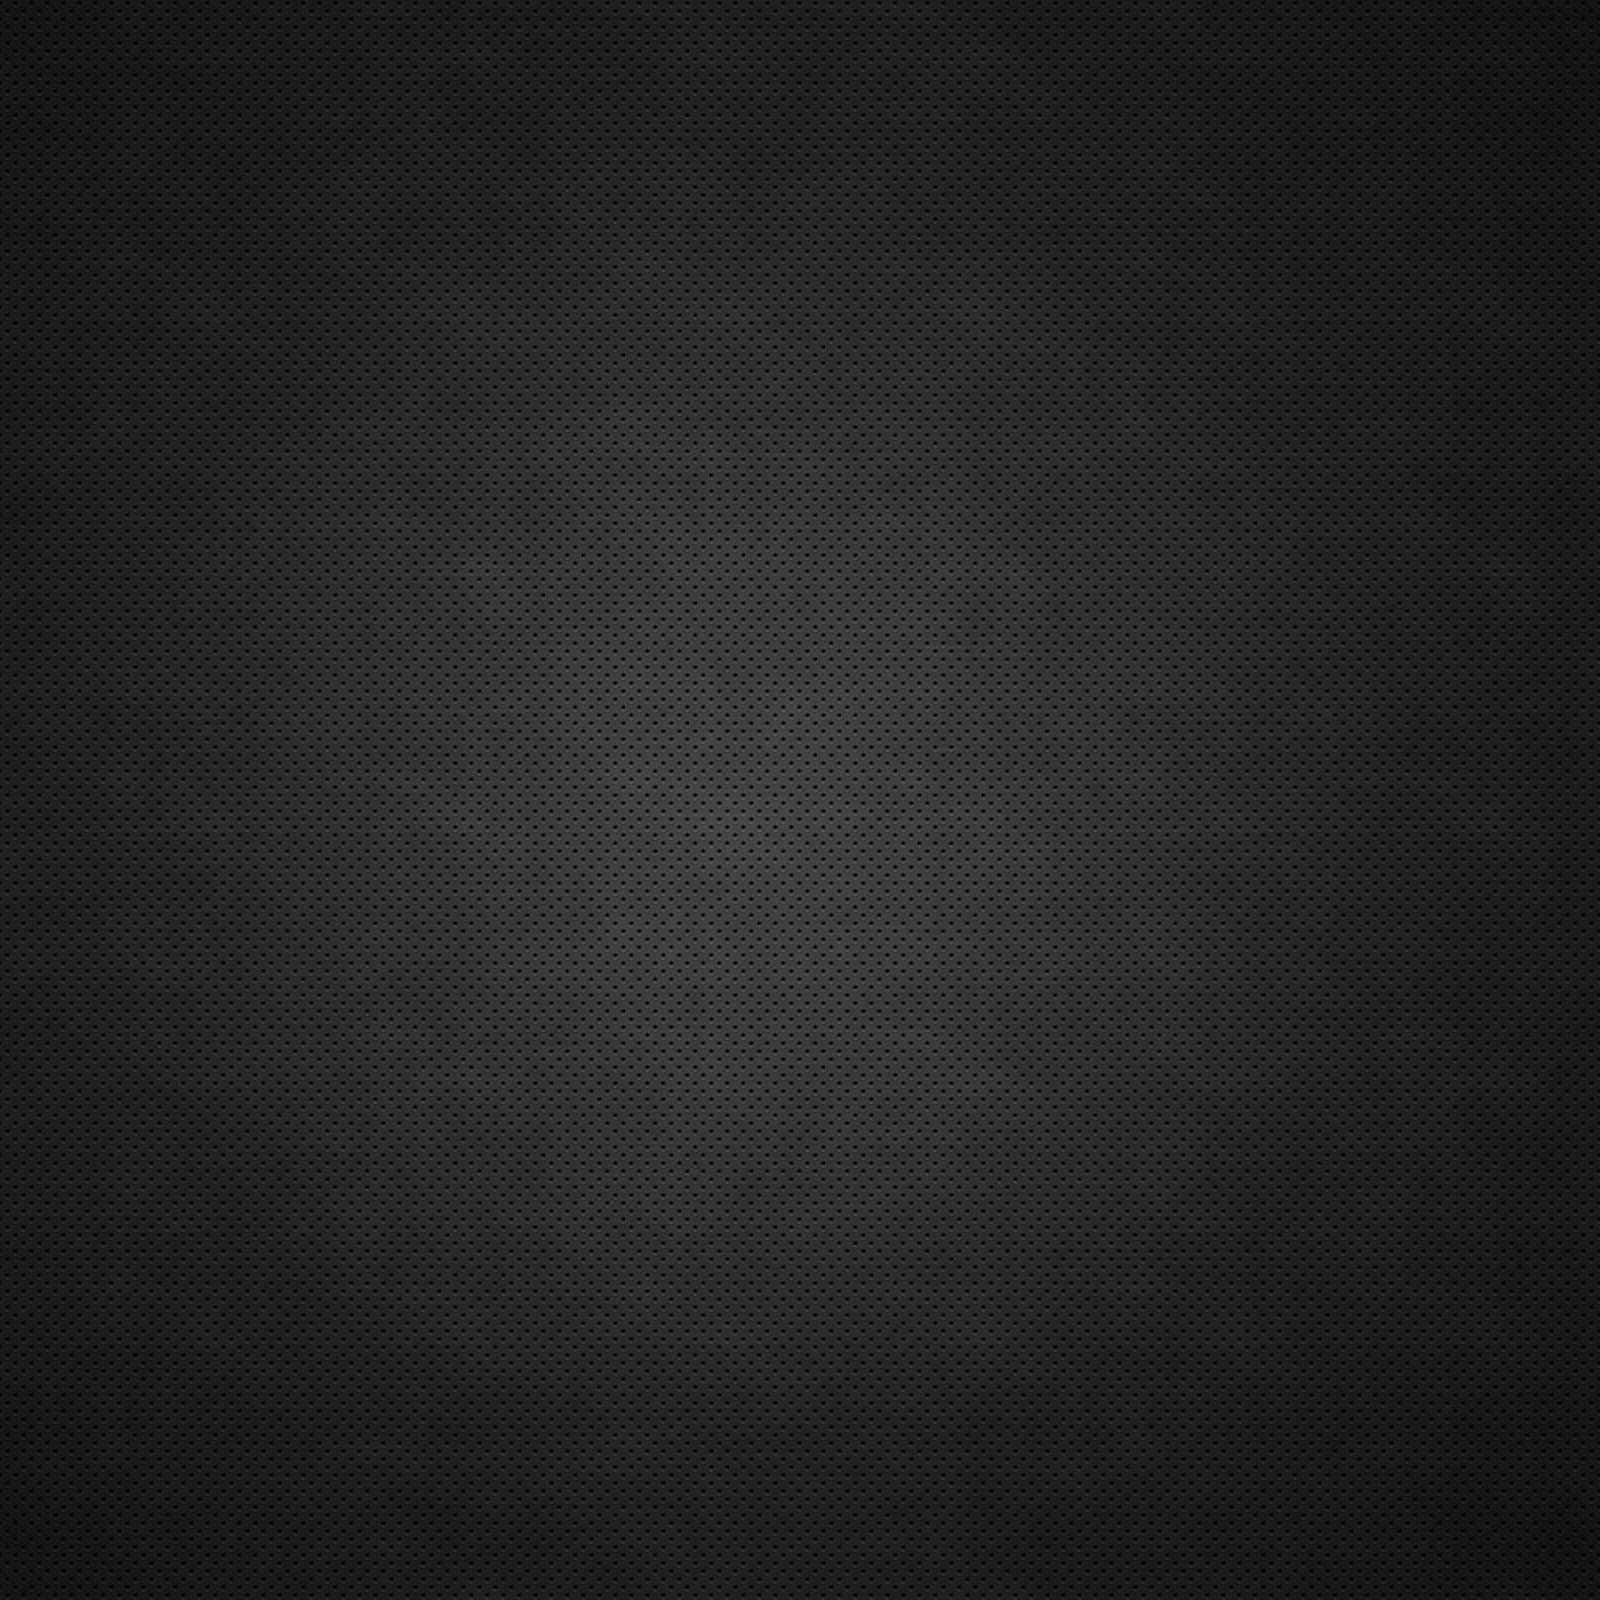 Caption: Sleek Black Ipad Showcasing A Stunning Gradient Glowing Dots Wallpaper Wallpaper